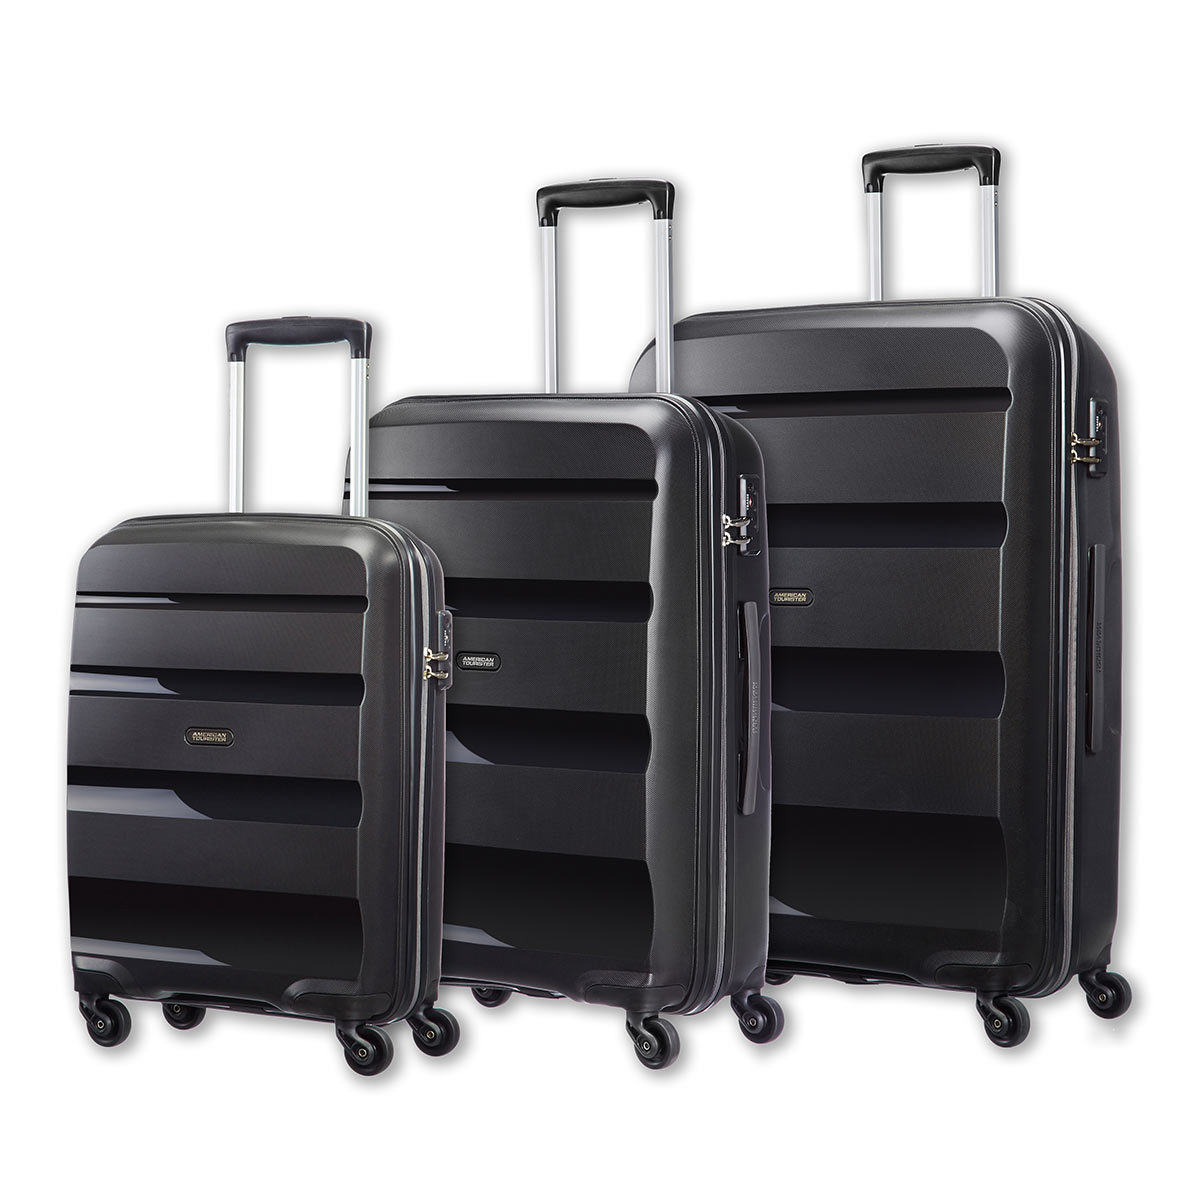 American Tourister 3 Hardside Suitcase Set